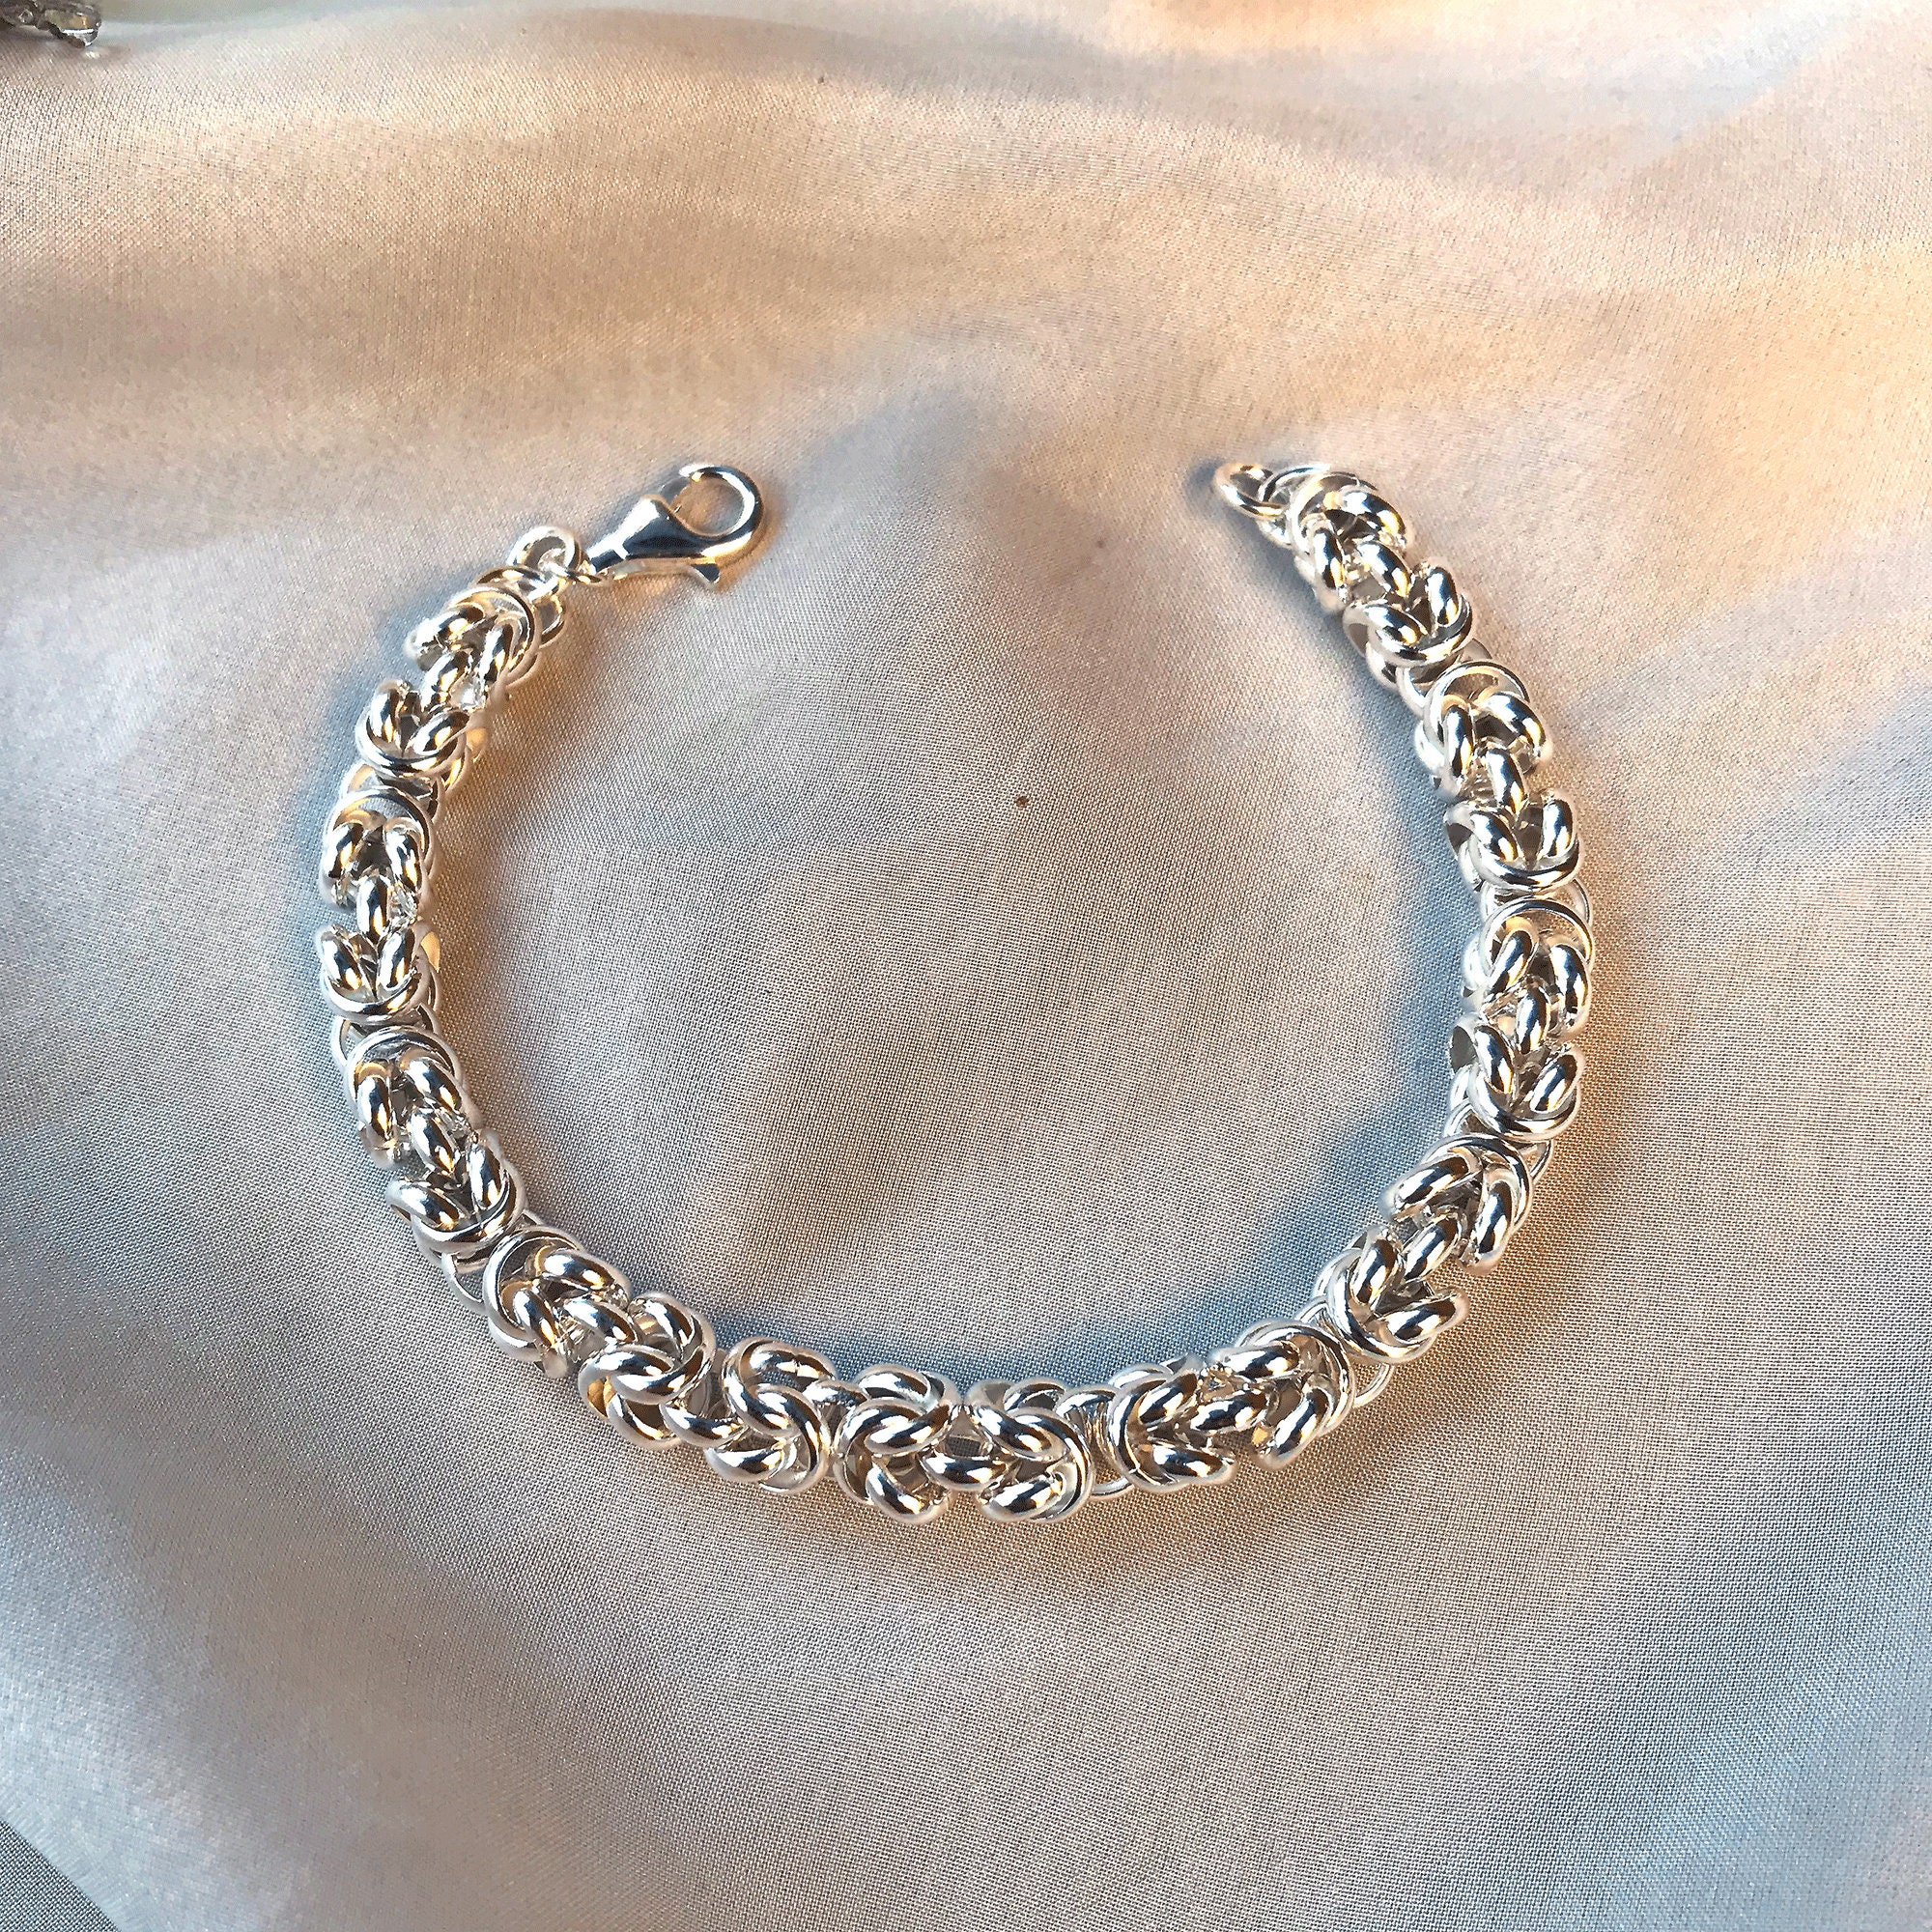 Rio Grande Sterling Silver Byzantine Chain Mail Bracelet Kit